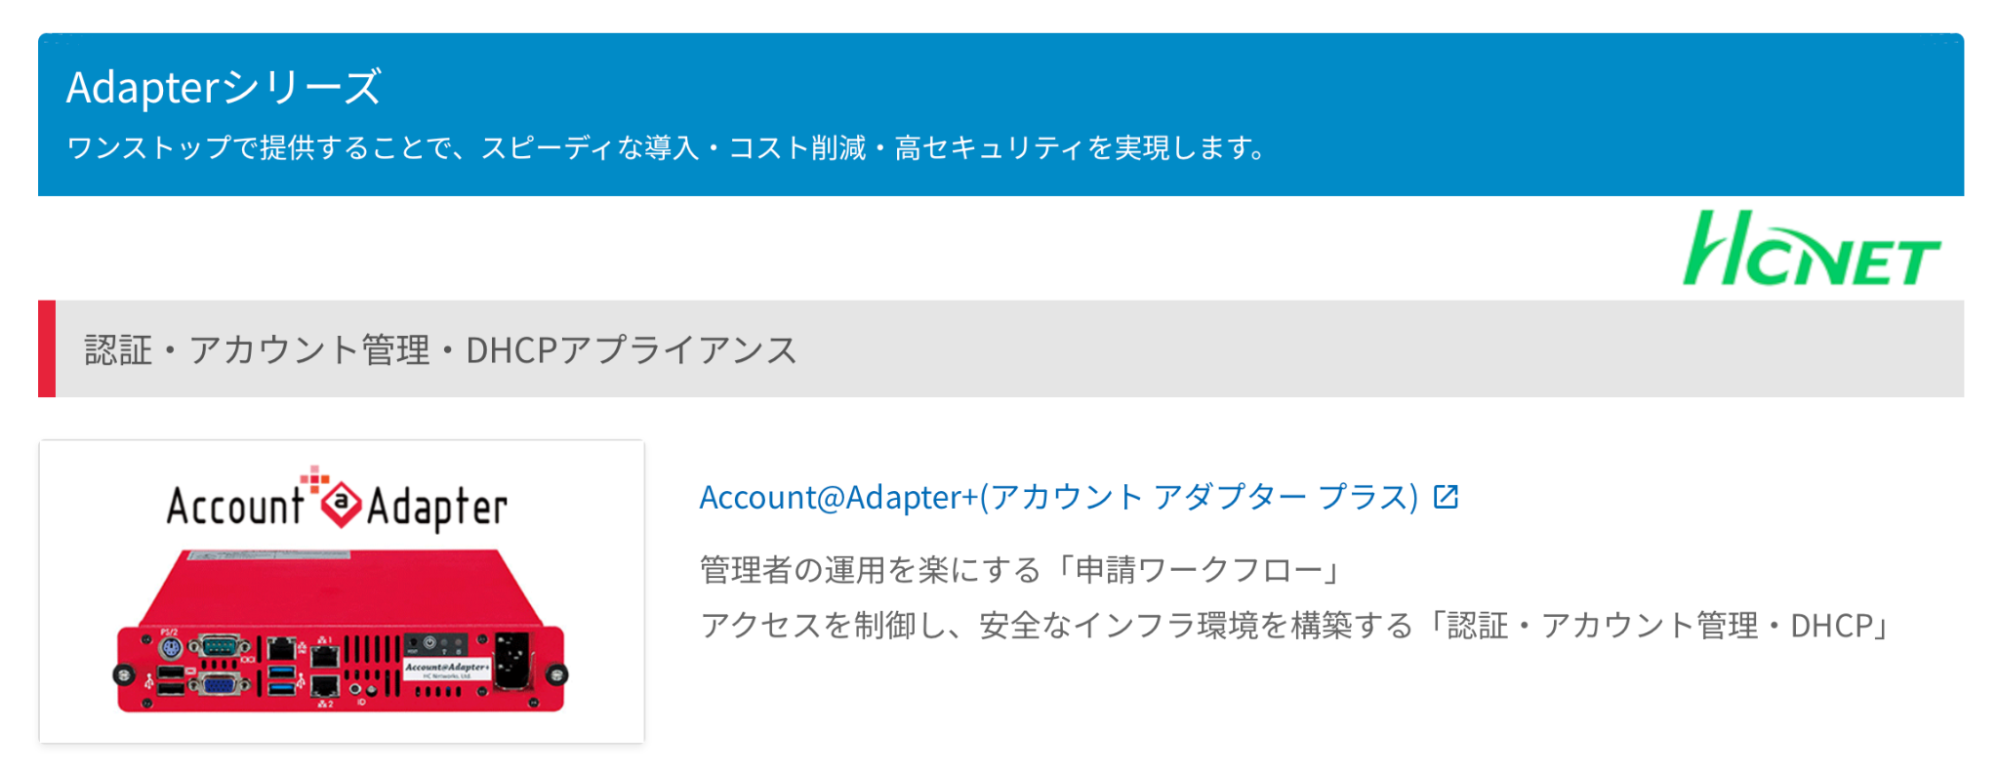 Apresia Account Adapter+